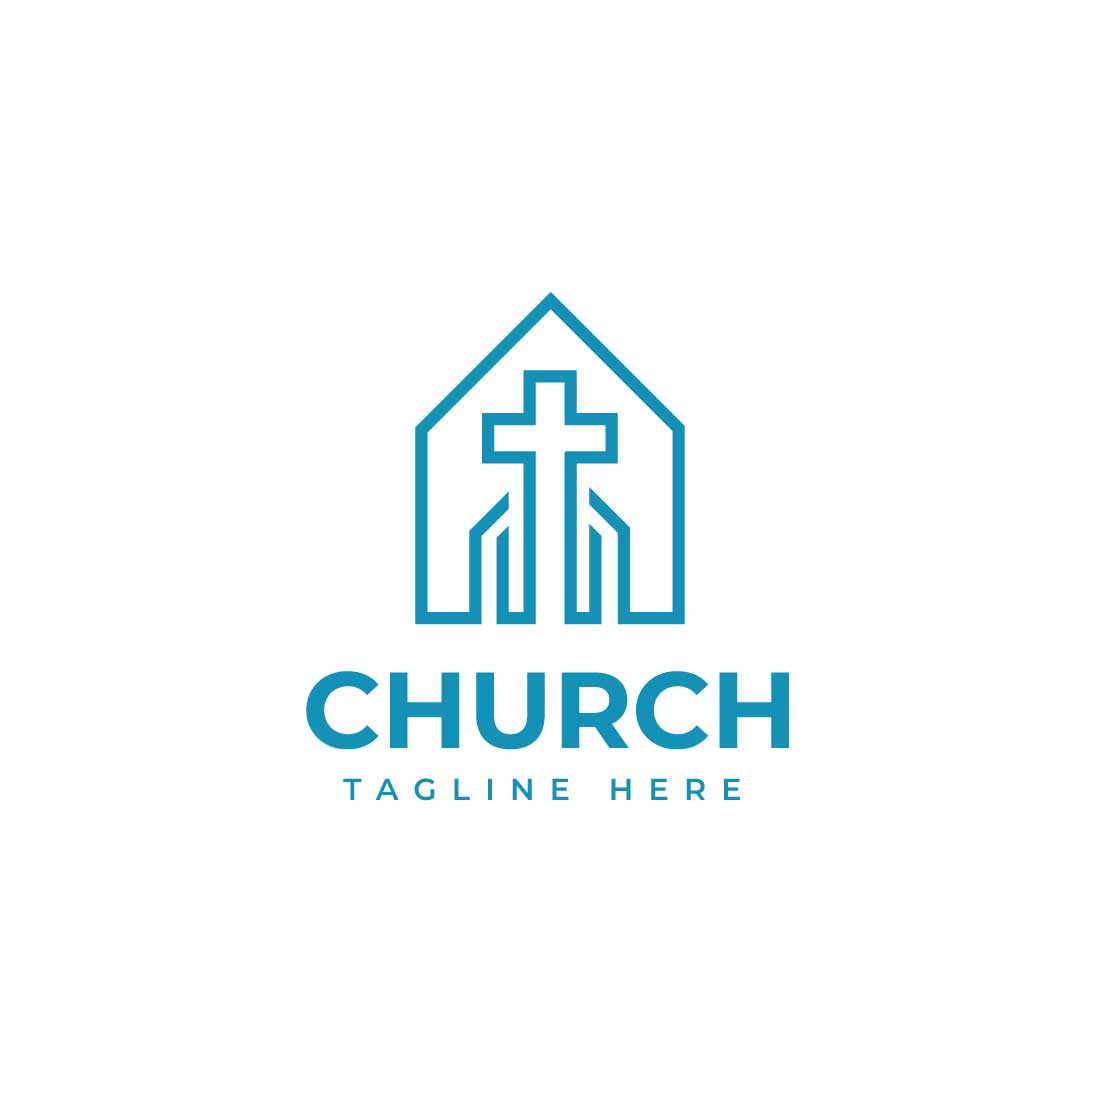 Modern church house line art logo design cover image.